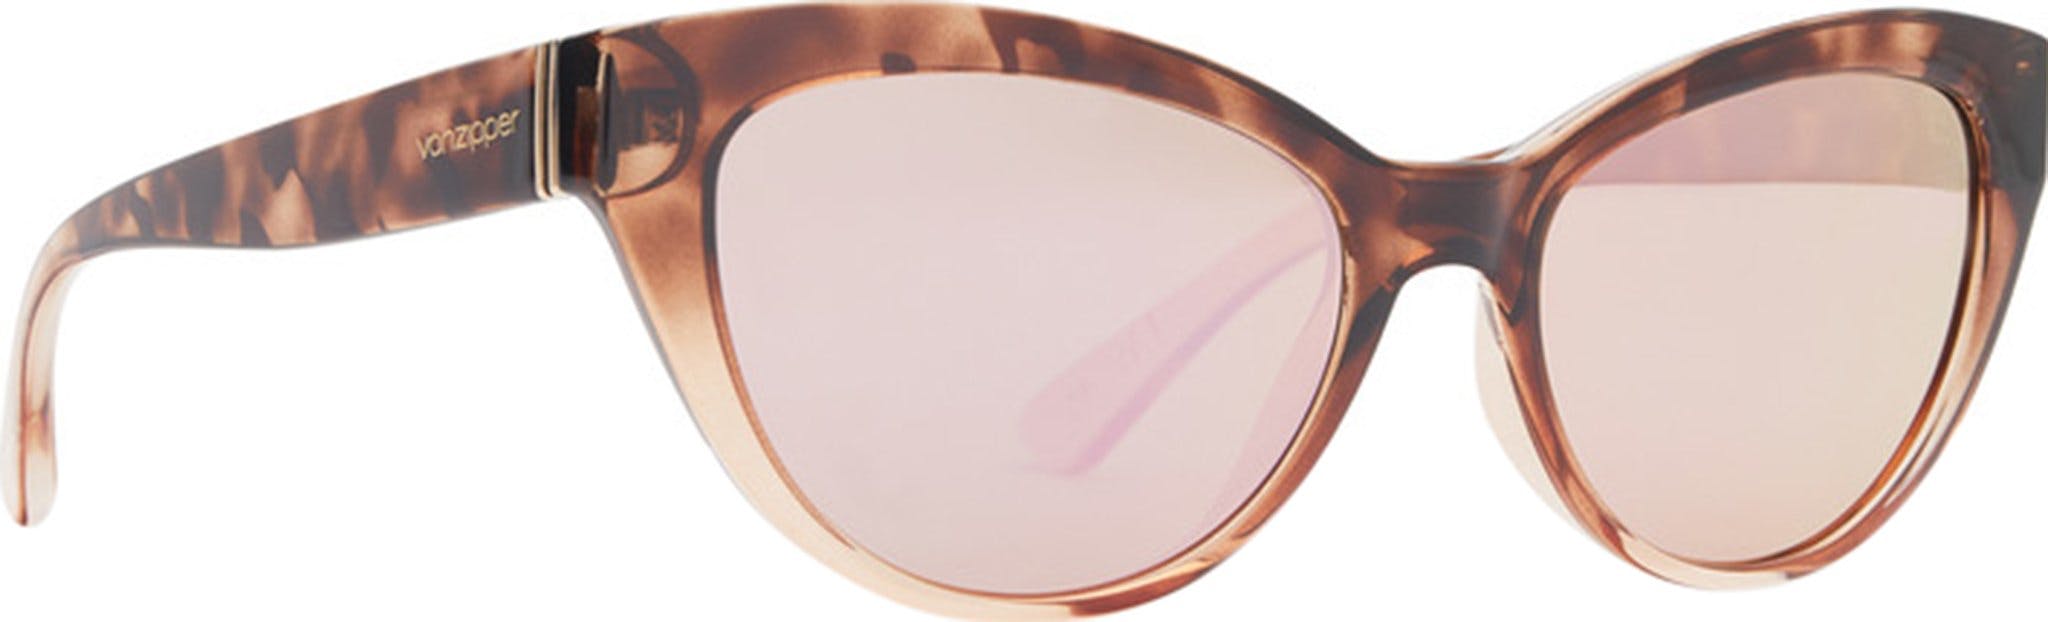 Product image for Ya Ya! Chrome Sunglasses - Unisex